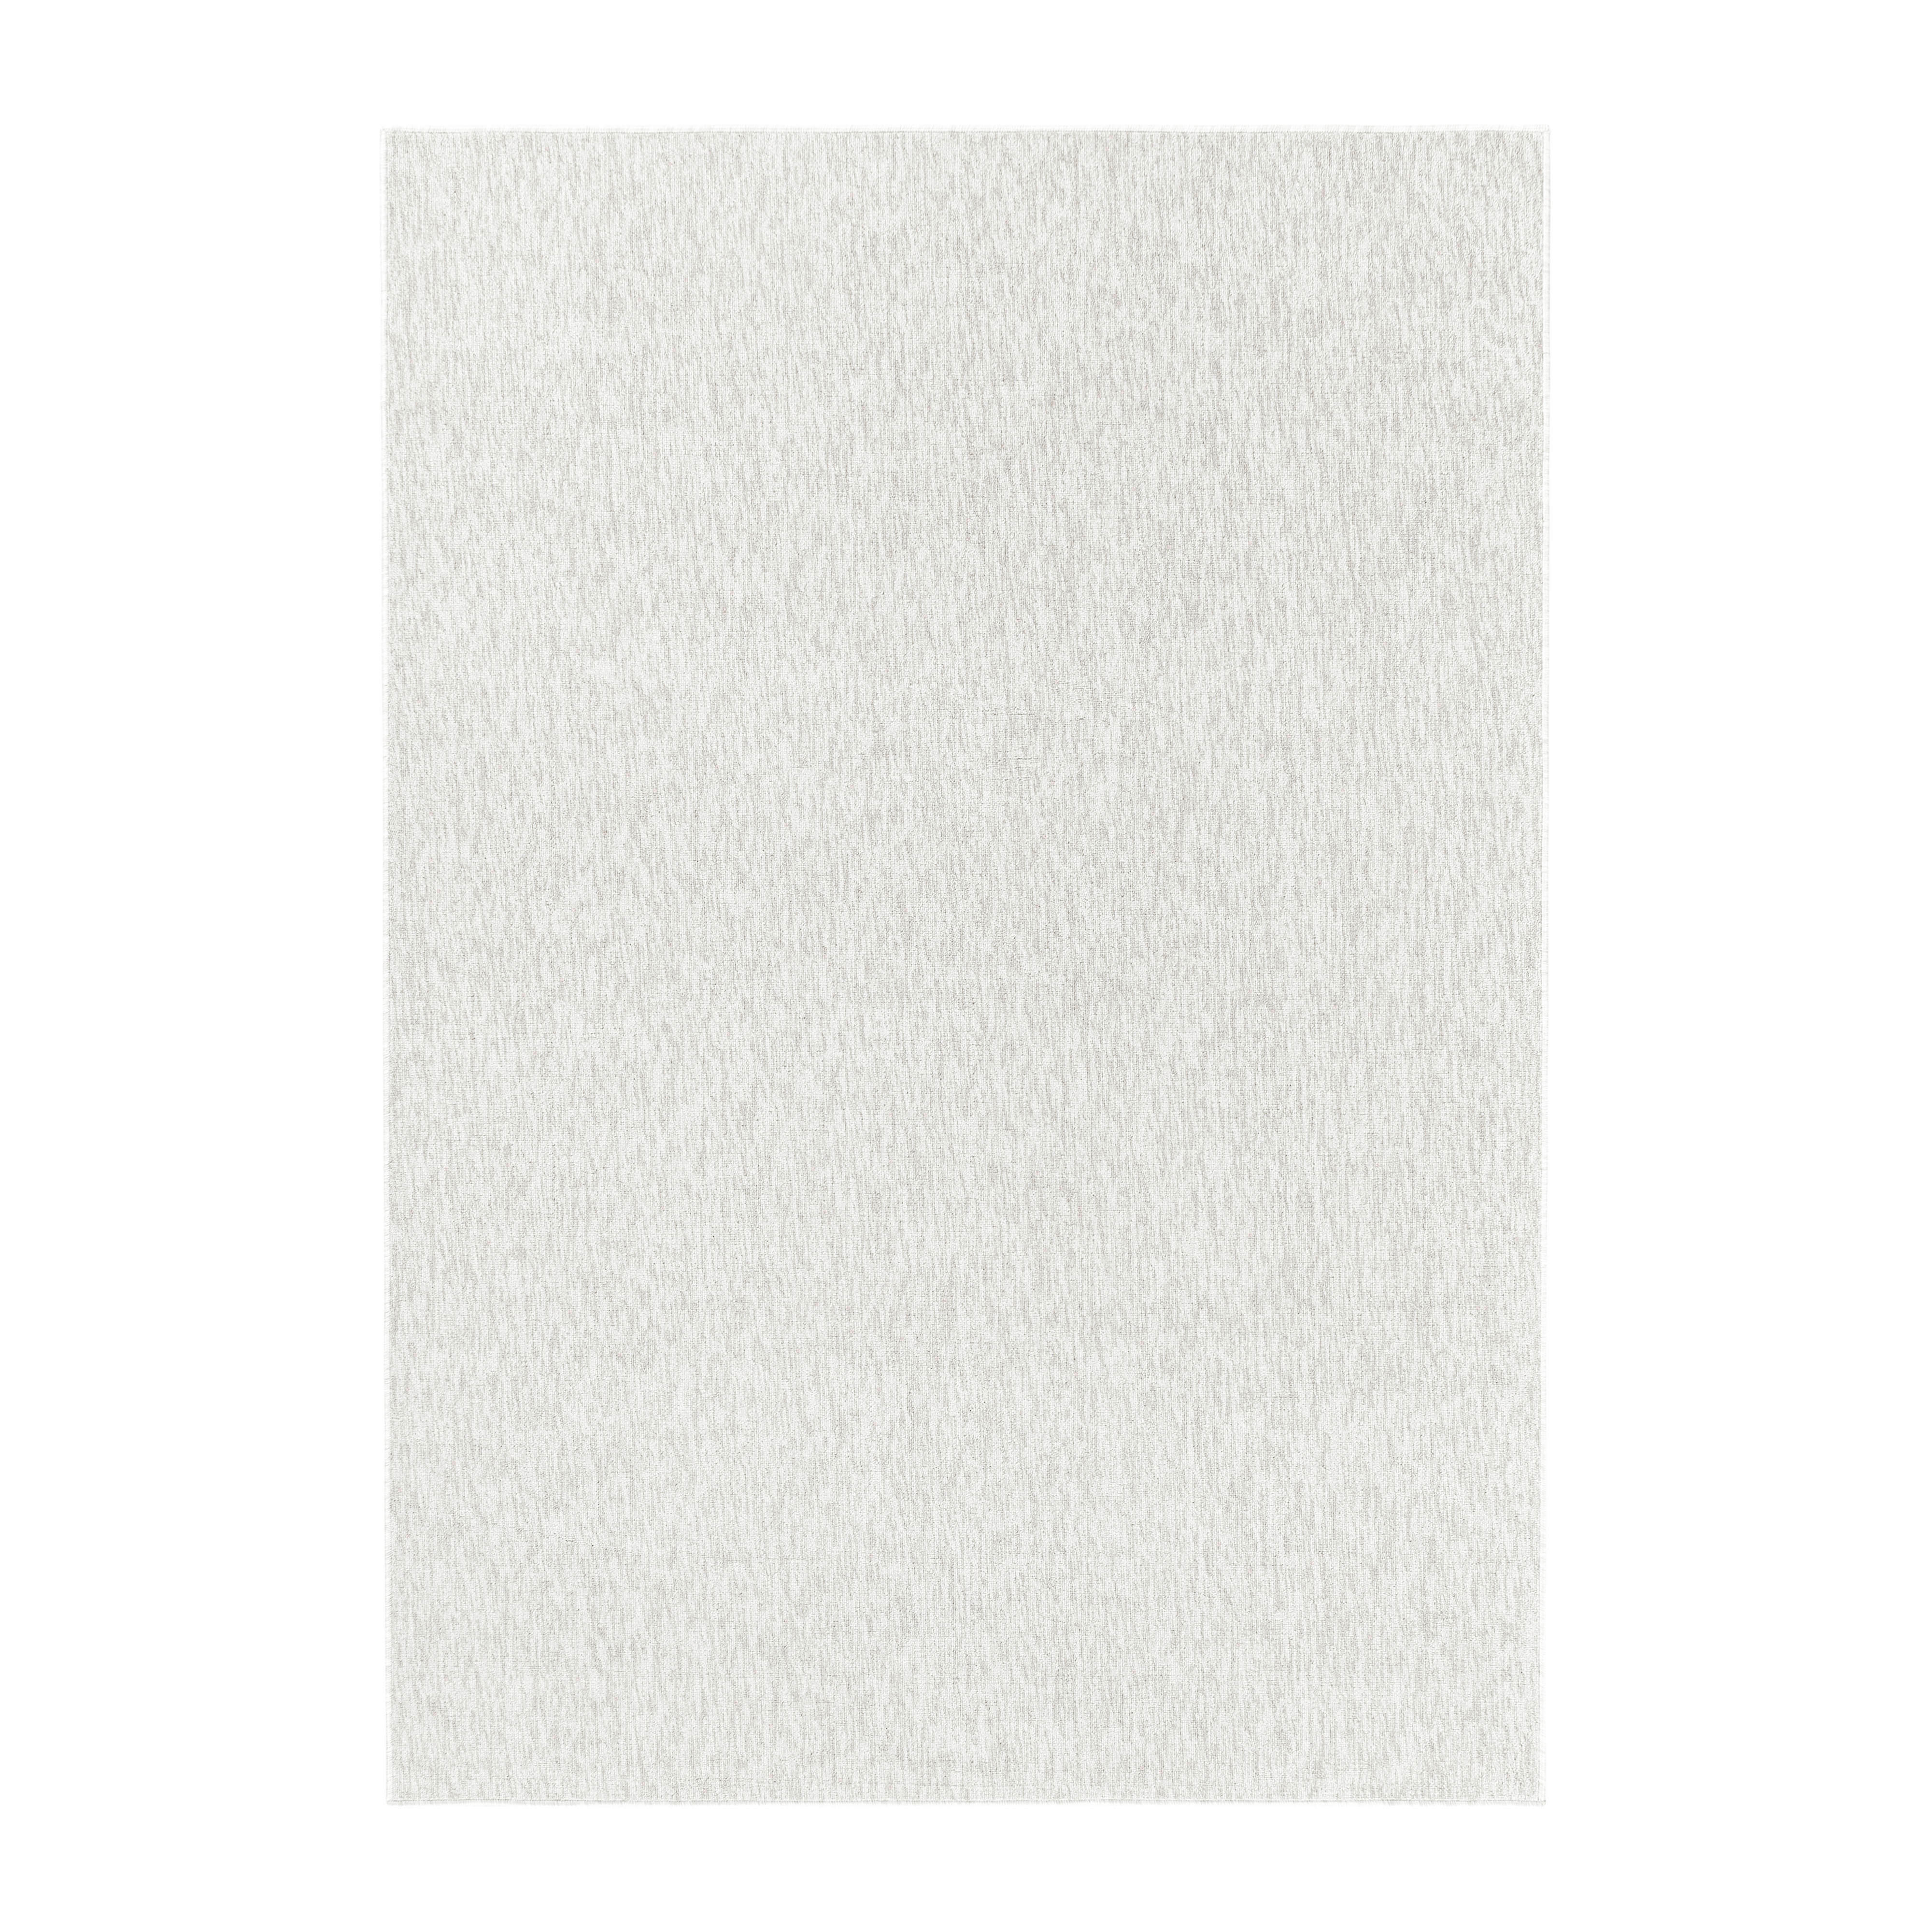 FLACHWEBETEPPICH 80/150 cm Nizza Creme  - Creme, KONVENTIONELL, Textil (80/150cm) - Novel